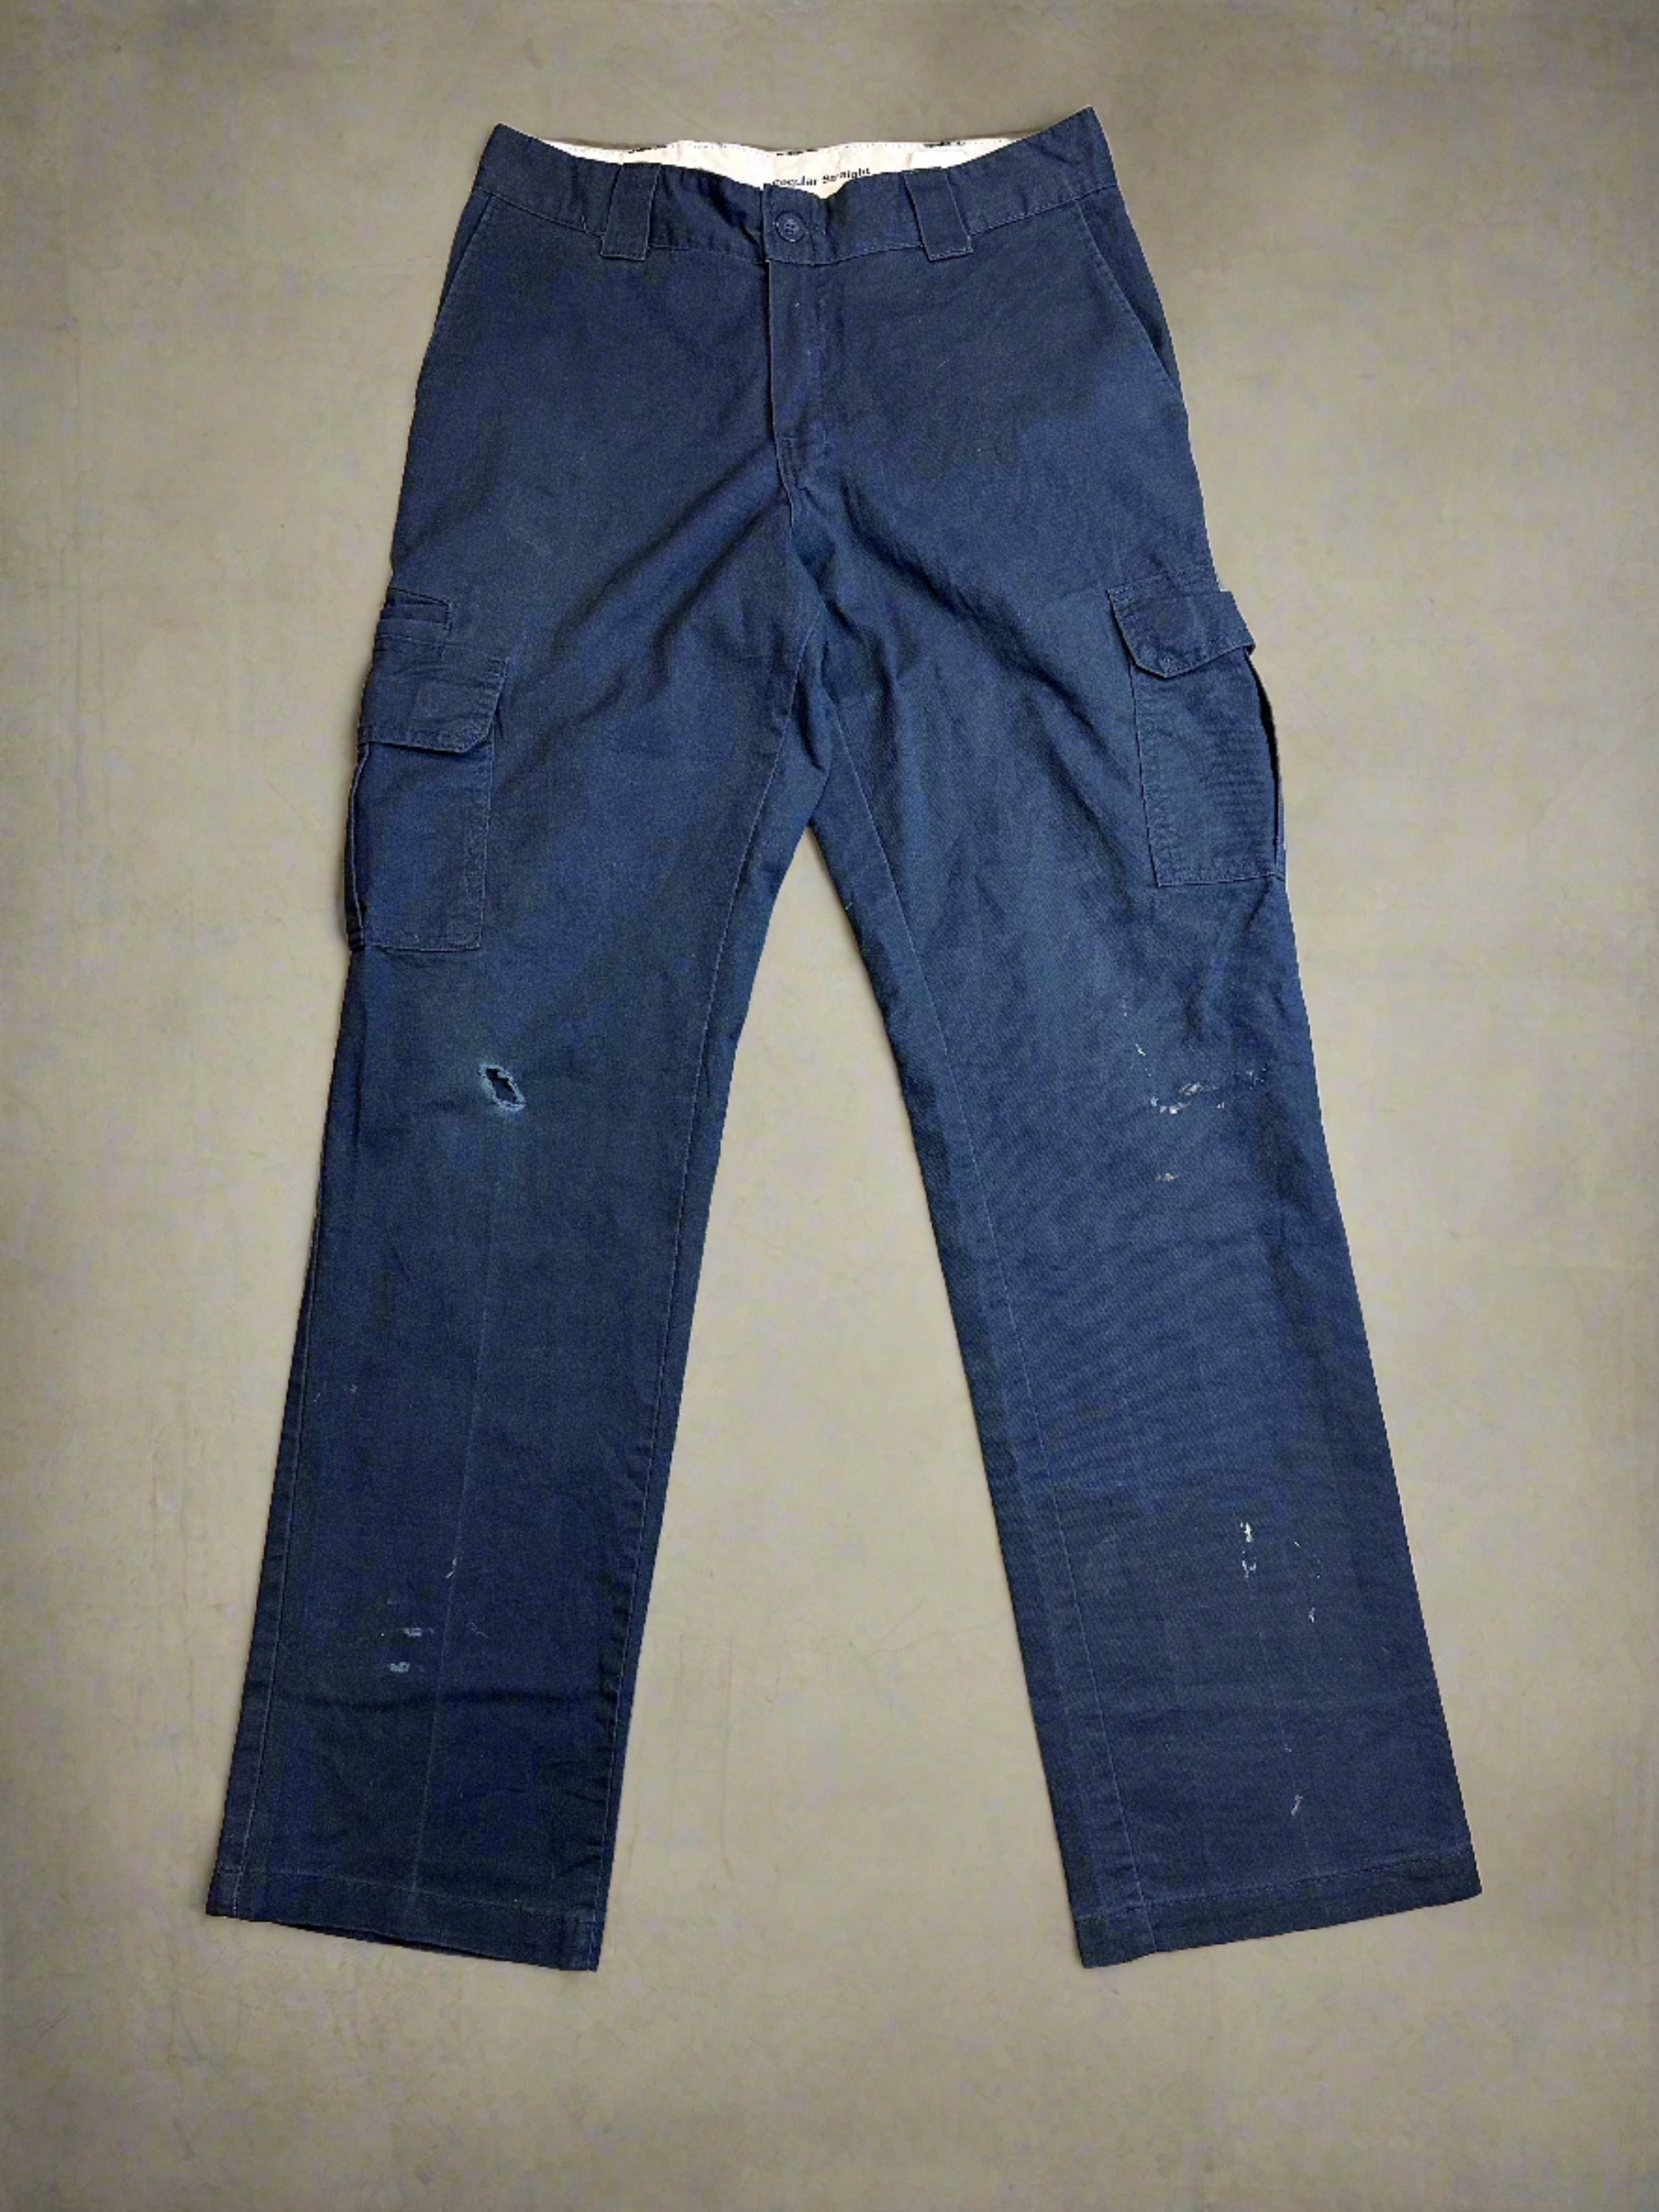 Vintage Dickies Cargo Pants - size 32x34